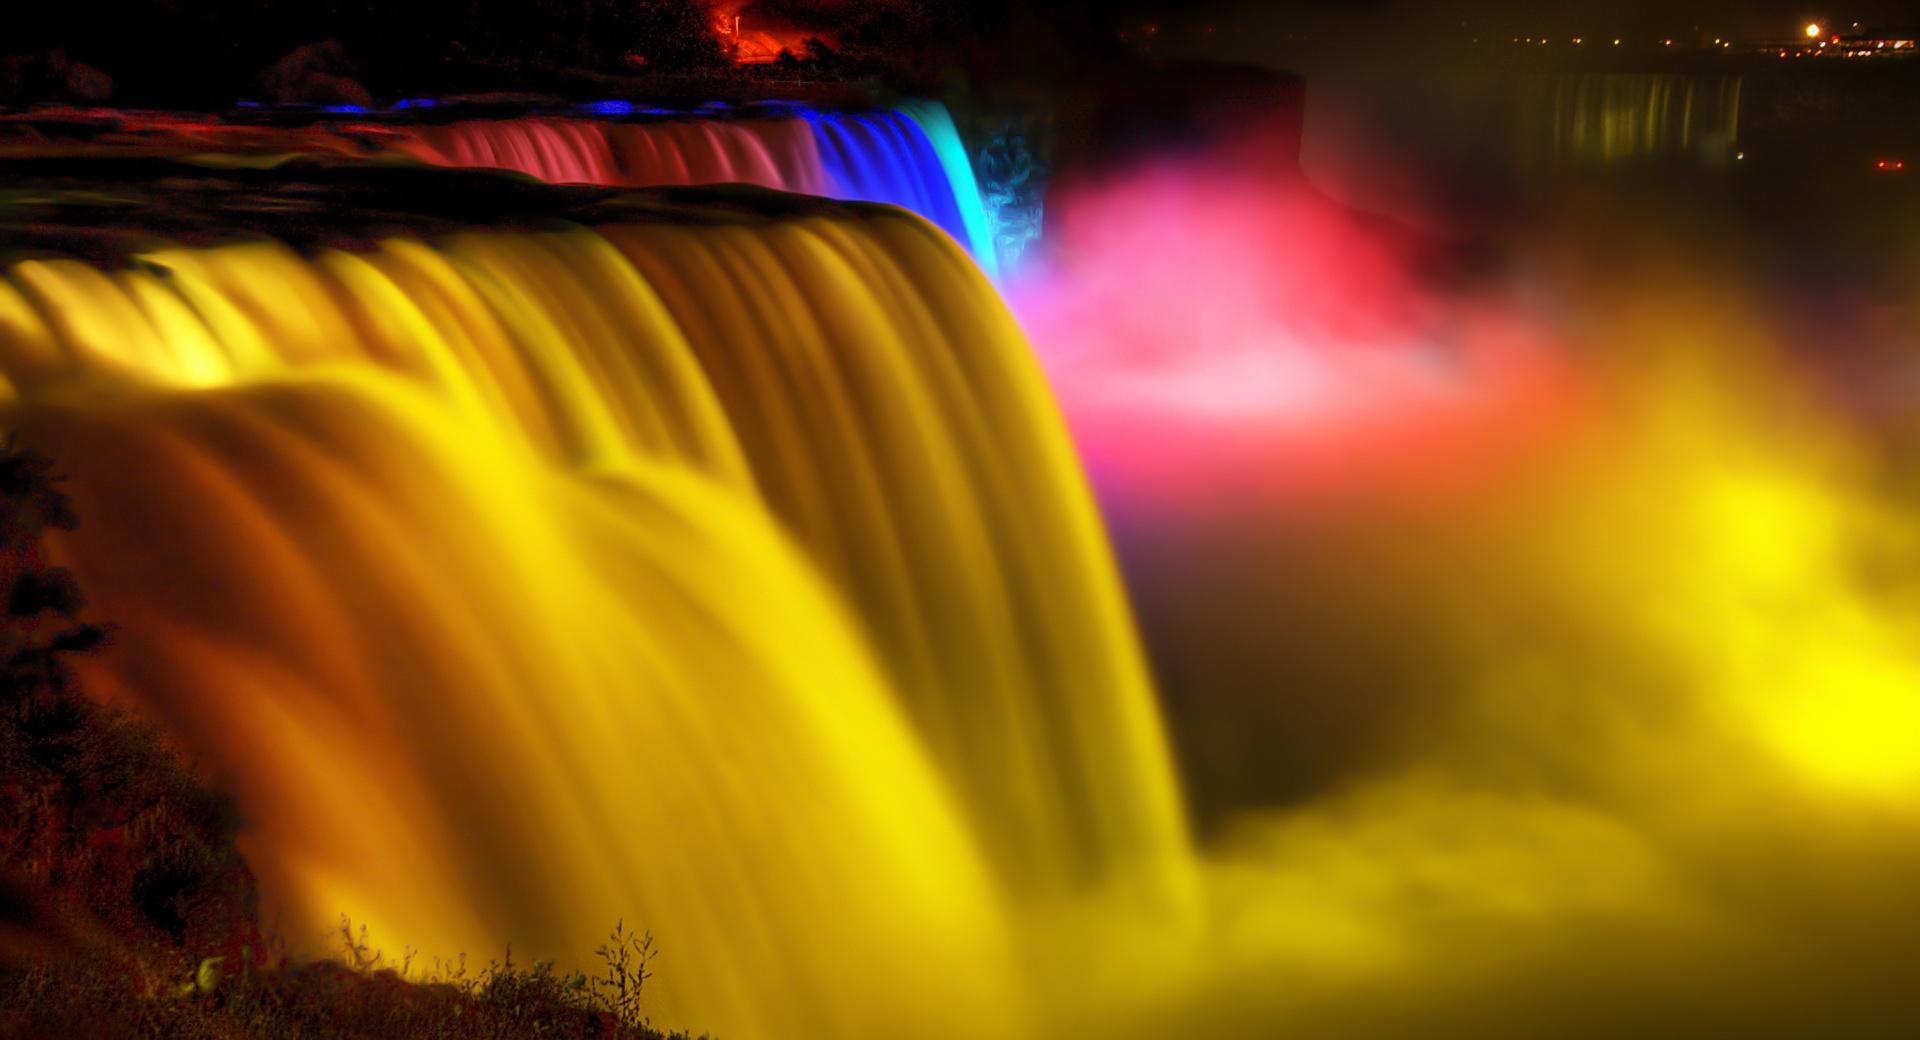 Niagara Falls Night View at 1024 x 1024 iPad size wallpapers HD quality